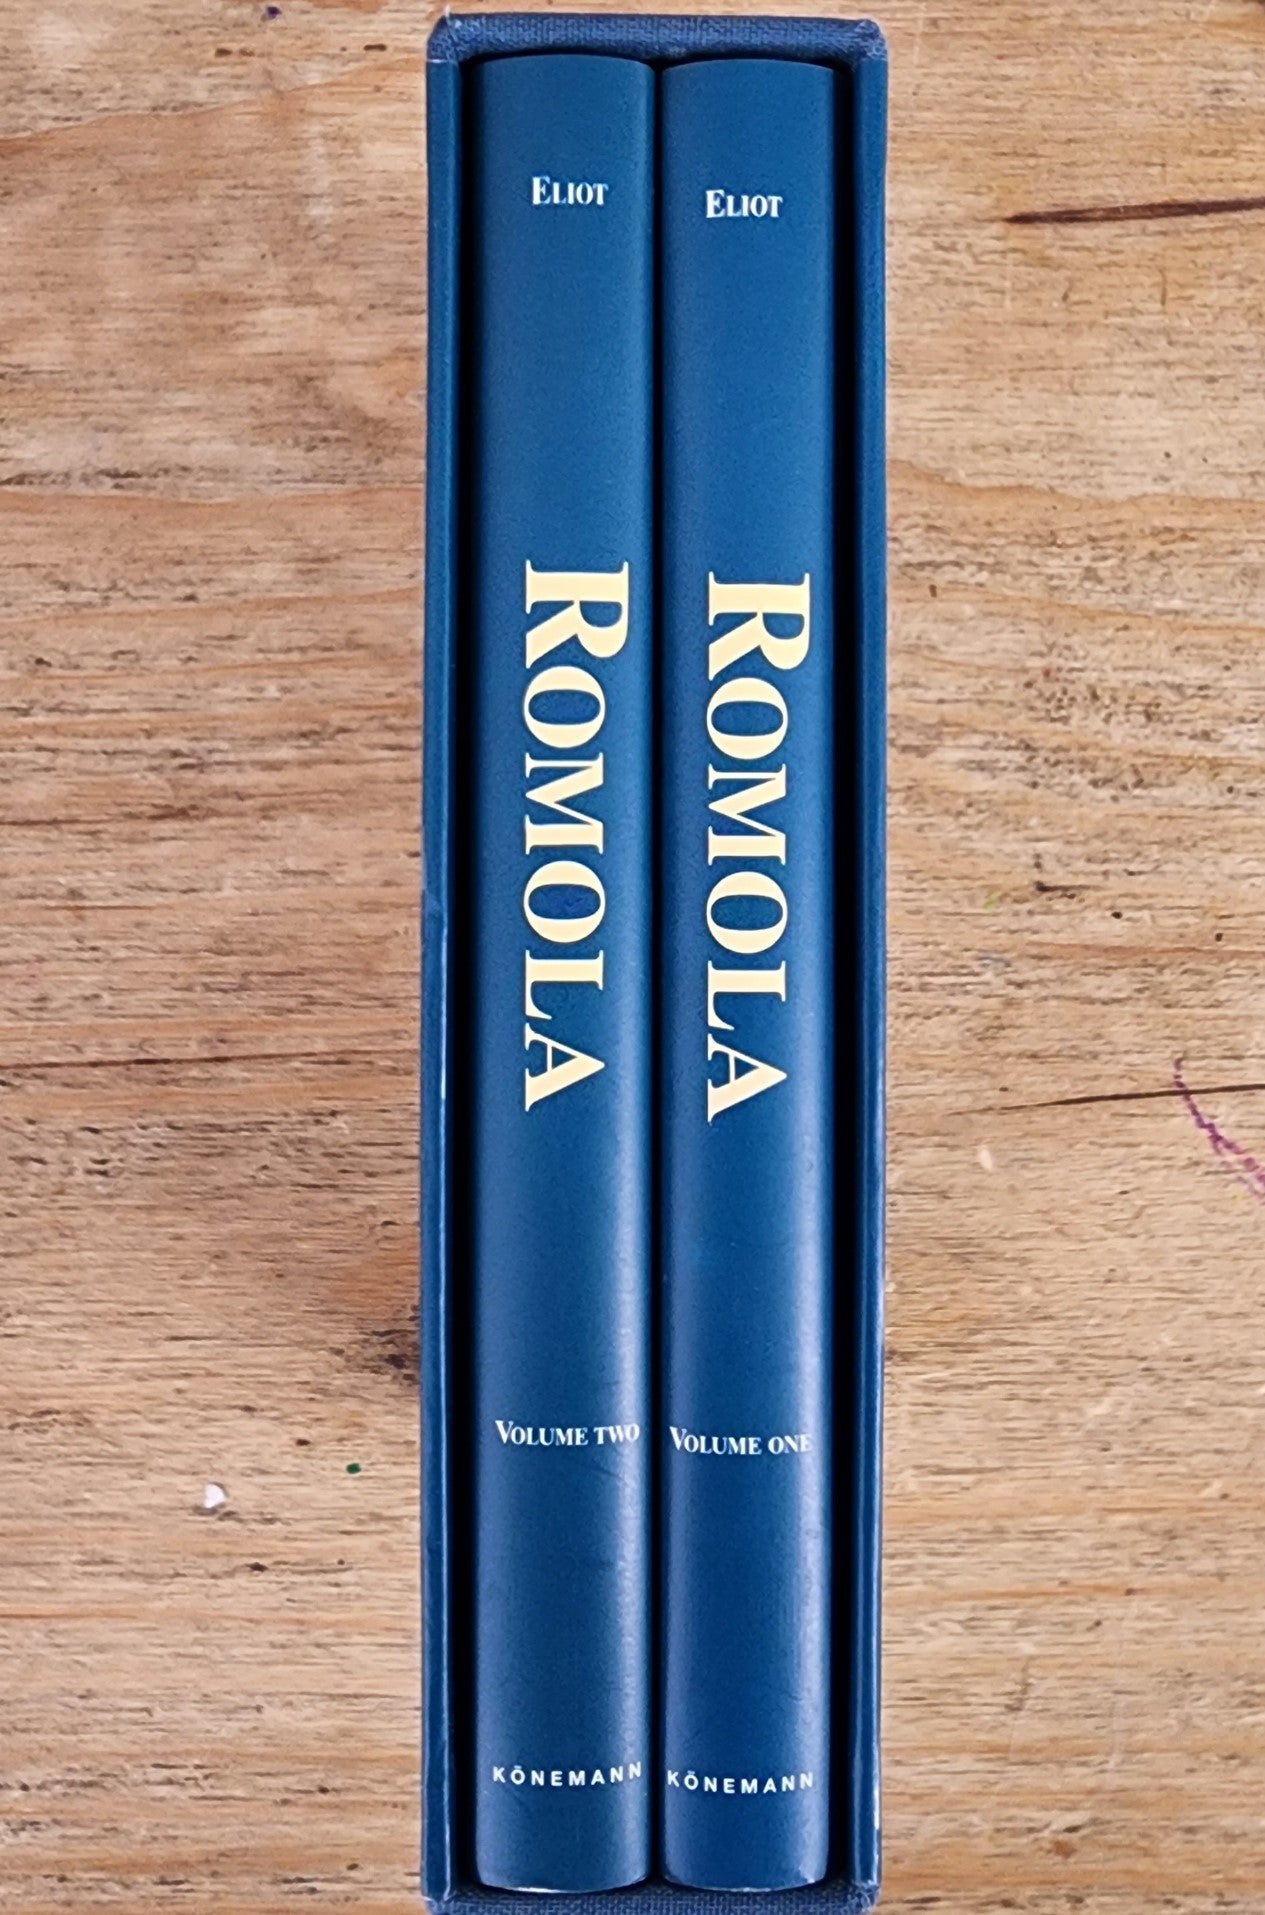 Romola: Vol 1 & 2